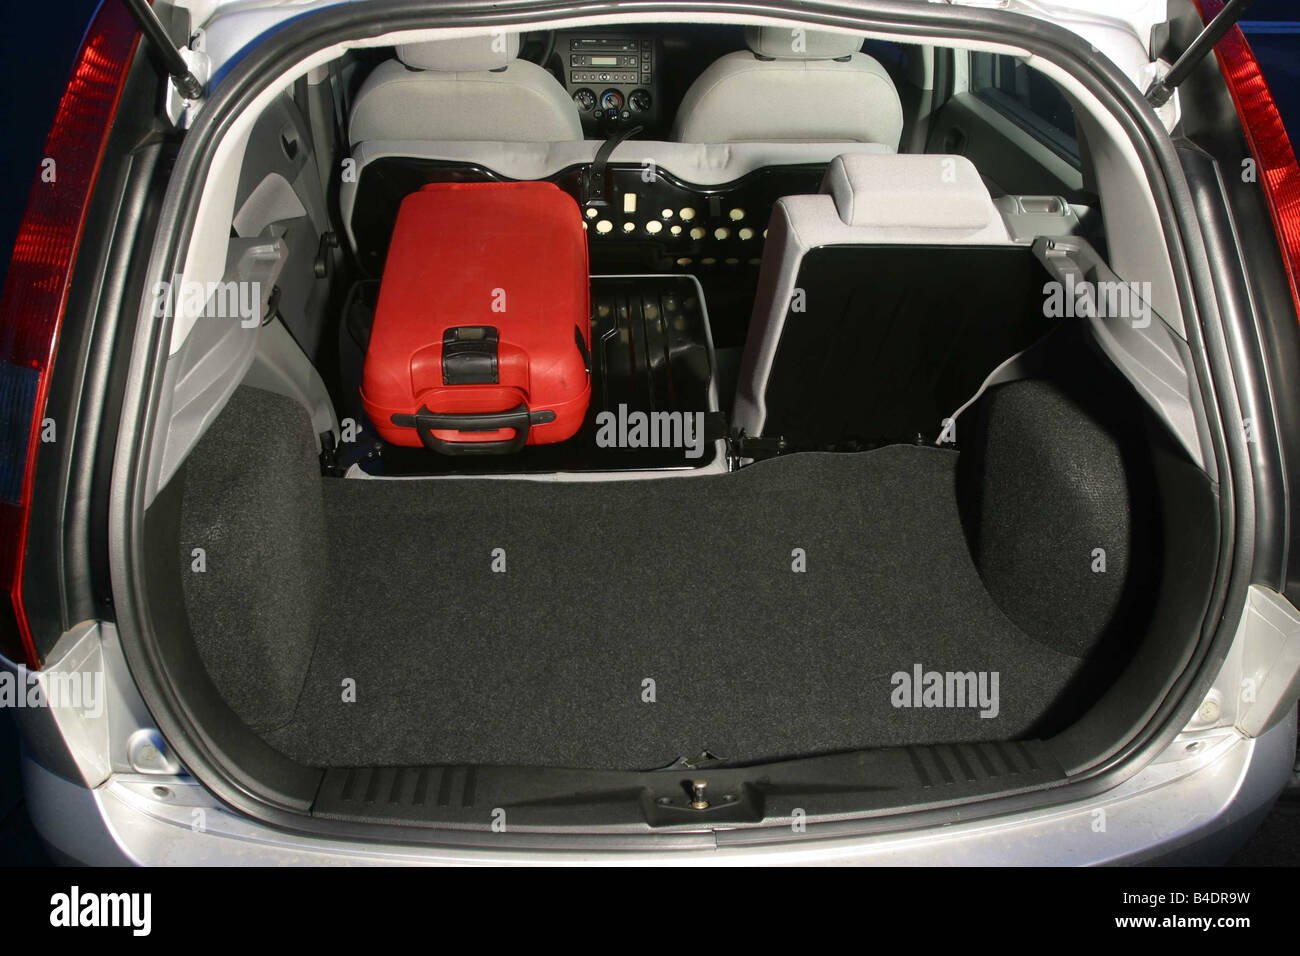 https://c8.alamy.com/compde/b4dr9w/auto-ford-fiesta-14-16v-kleine-ca-modell-jahr-2002-silber-limousine-blick-ins-boot-technikzubehor-zubehor-b4dr9w.jpg